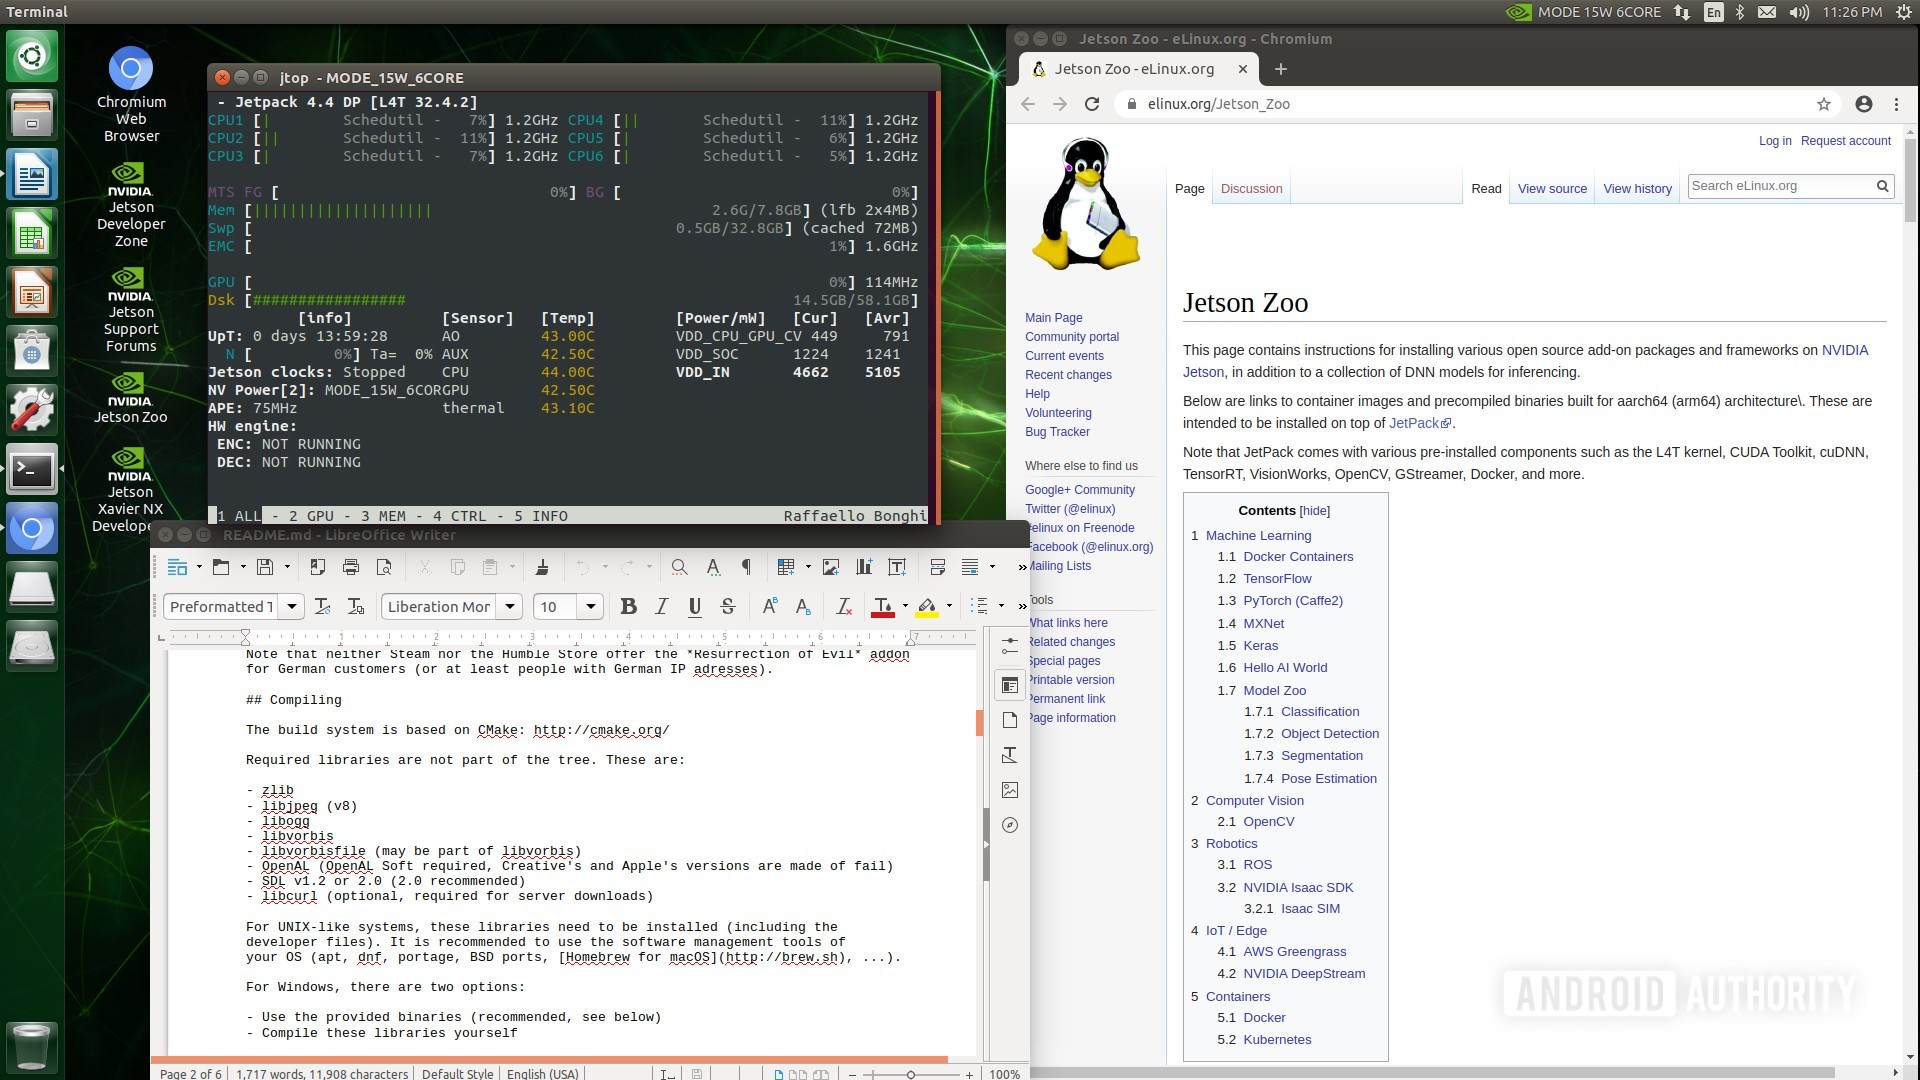 Jetson Xavier NX Ubuntu desktop